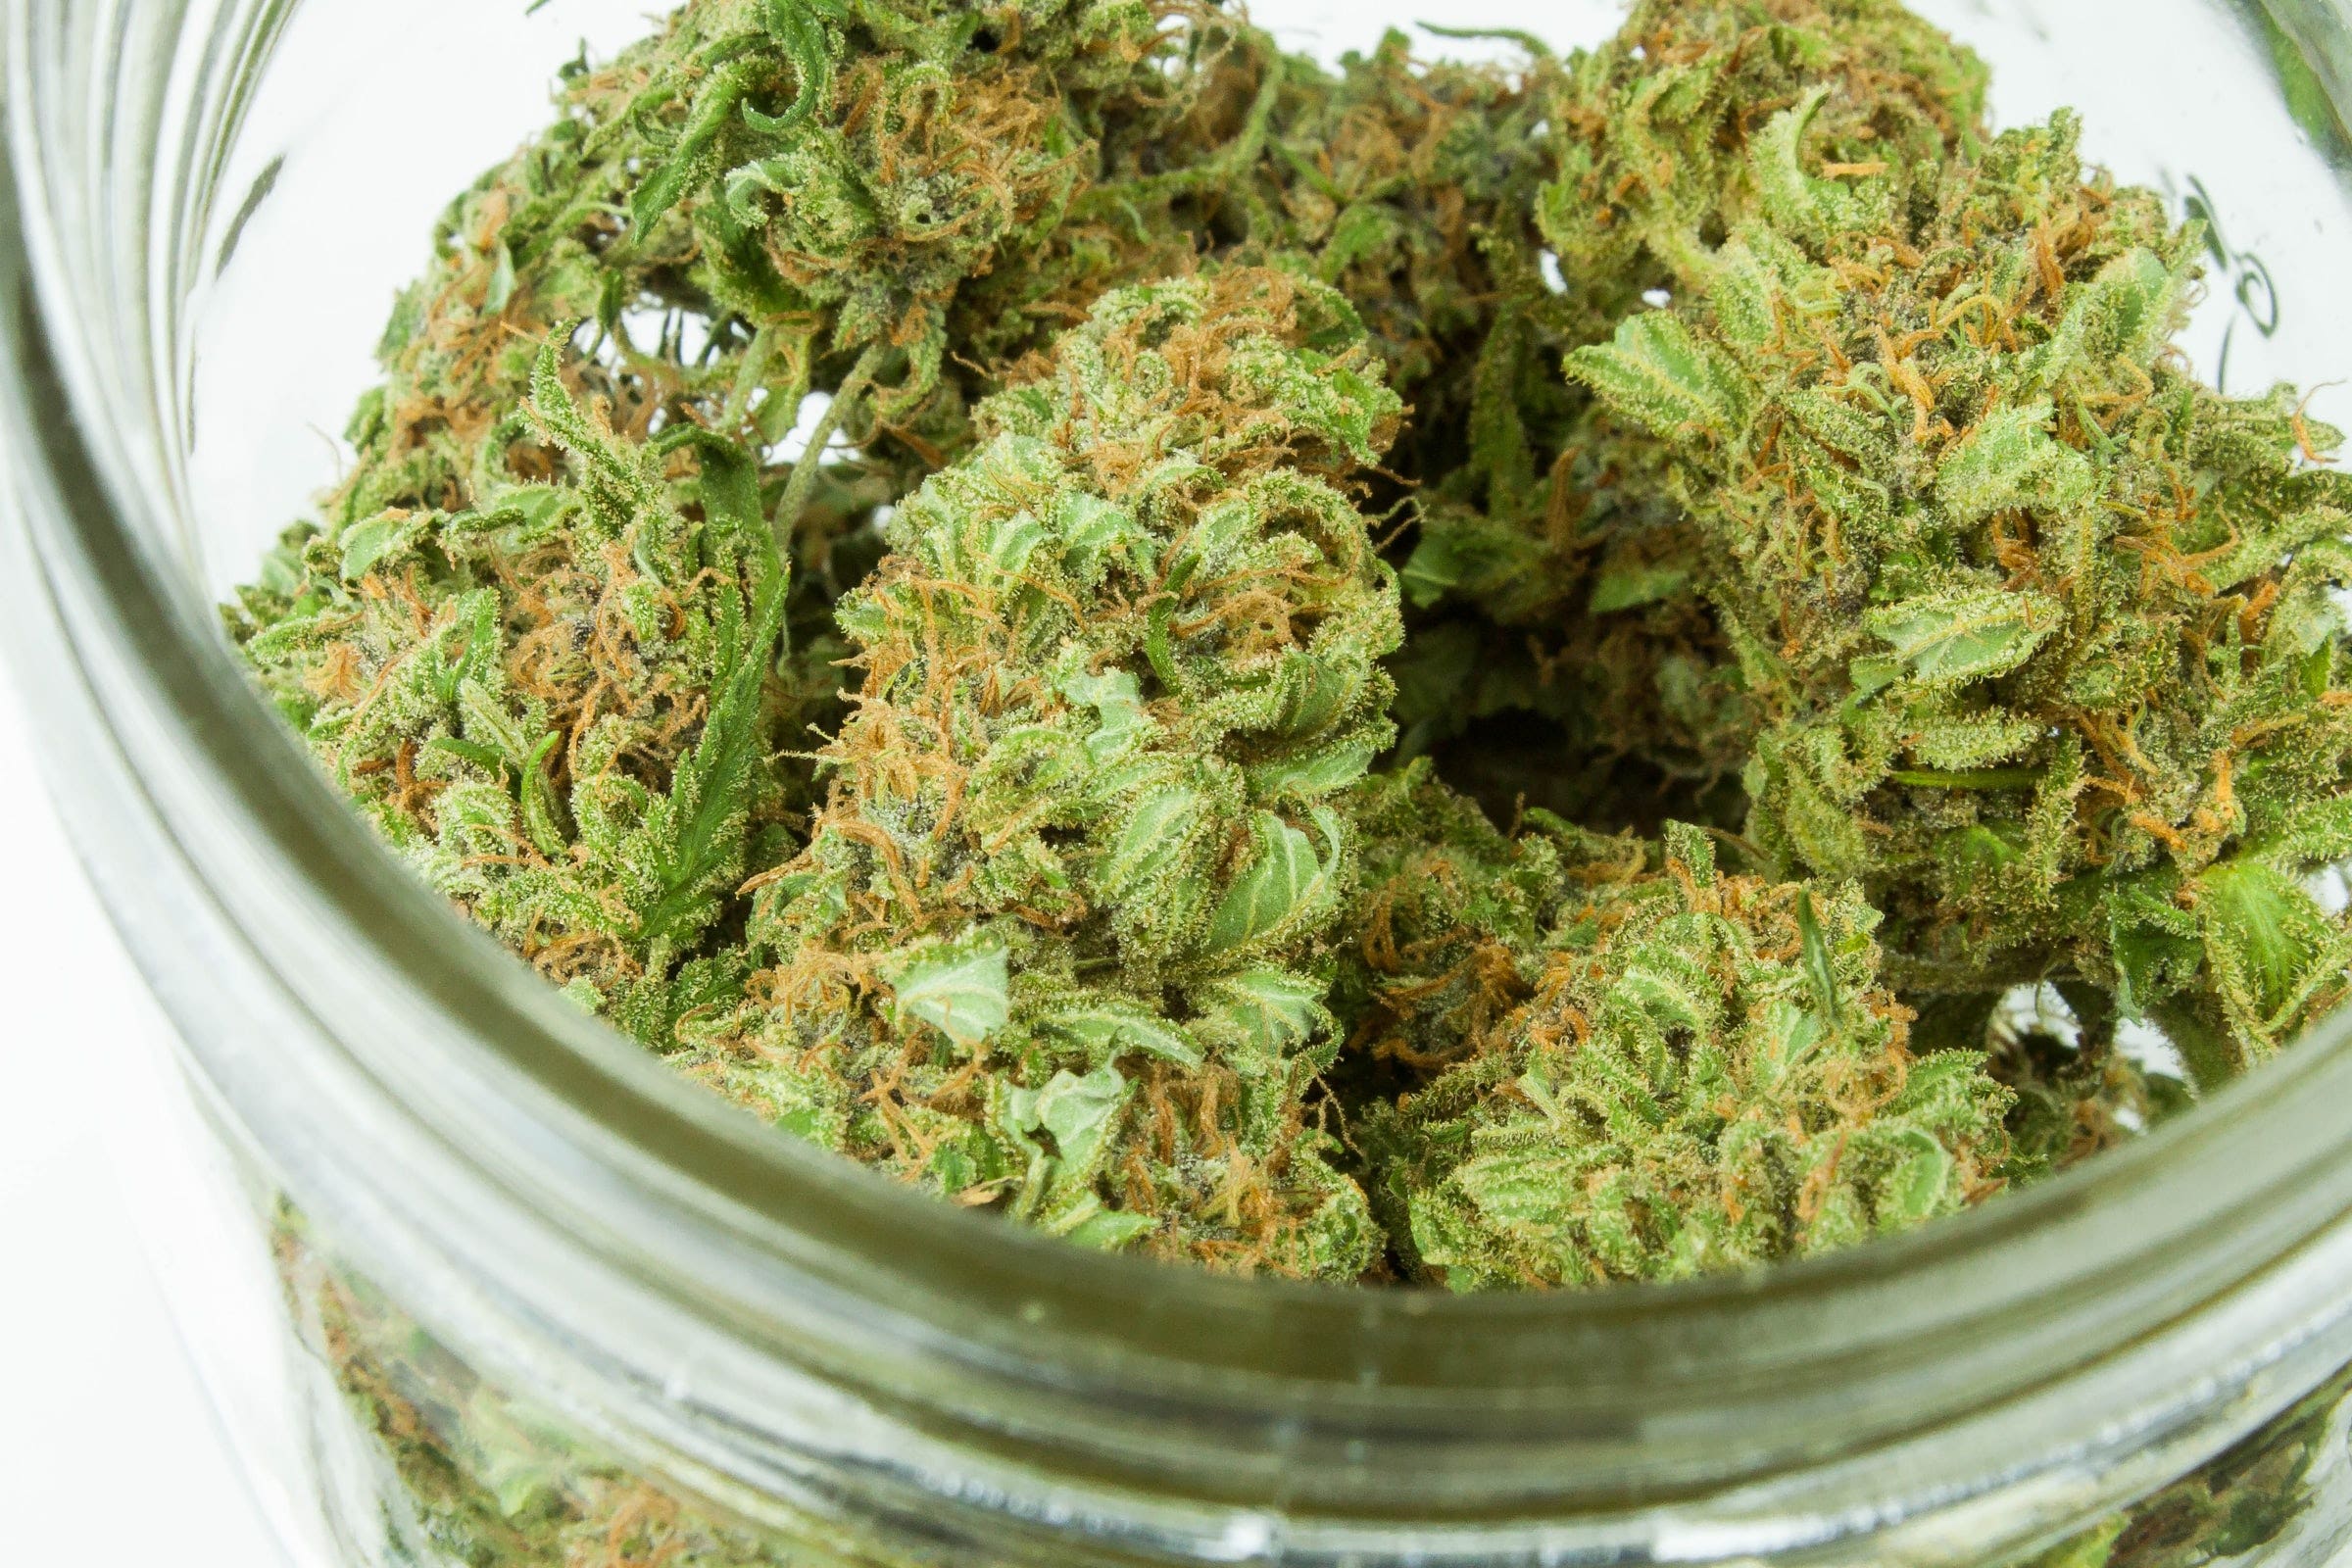 Ohio Cannabis Advocates Push Lawmakers To Review Marijuana Legalization, Submit 206K Signatures